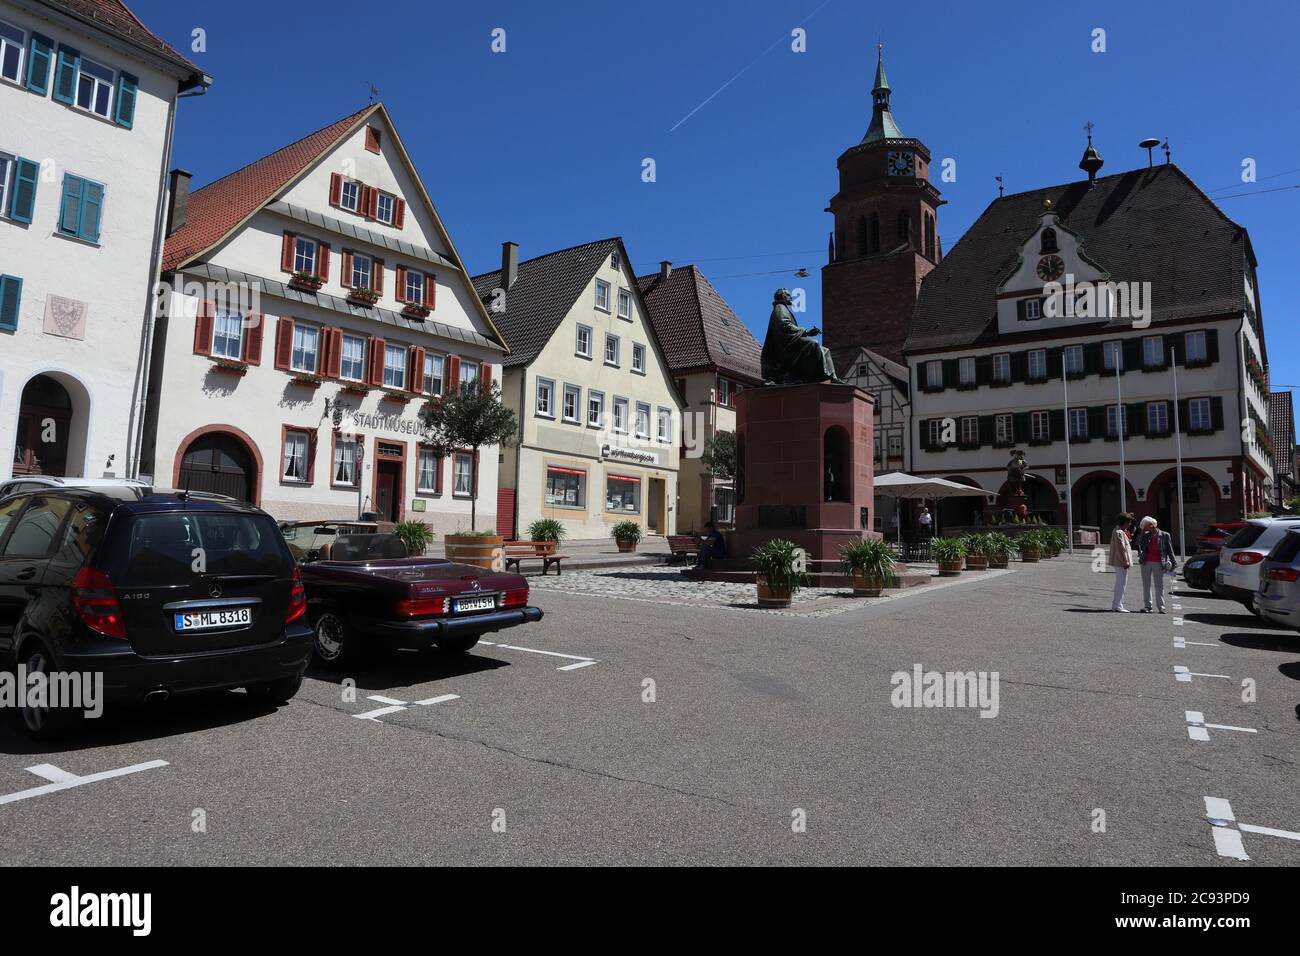 Weil der Stadt, Baden-Württemberg/ Germany - June 02 2019: In the historical center of Weil der Stadt, a town located in the Stuttgart Region of the G Stock Photo